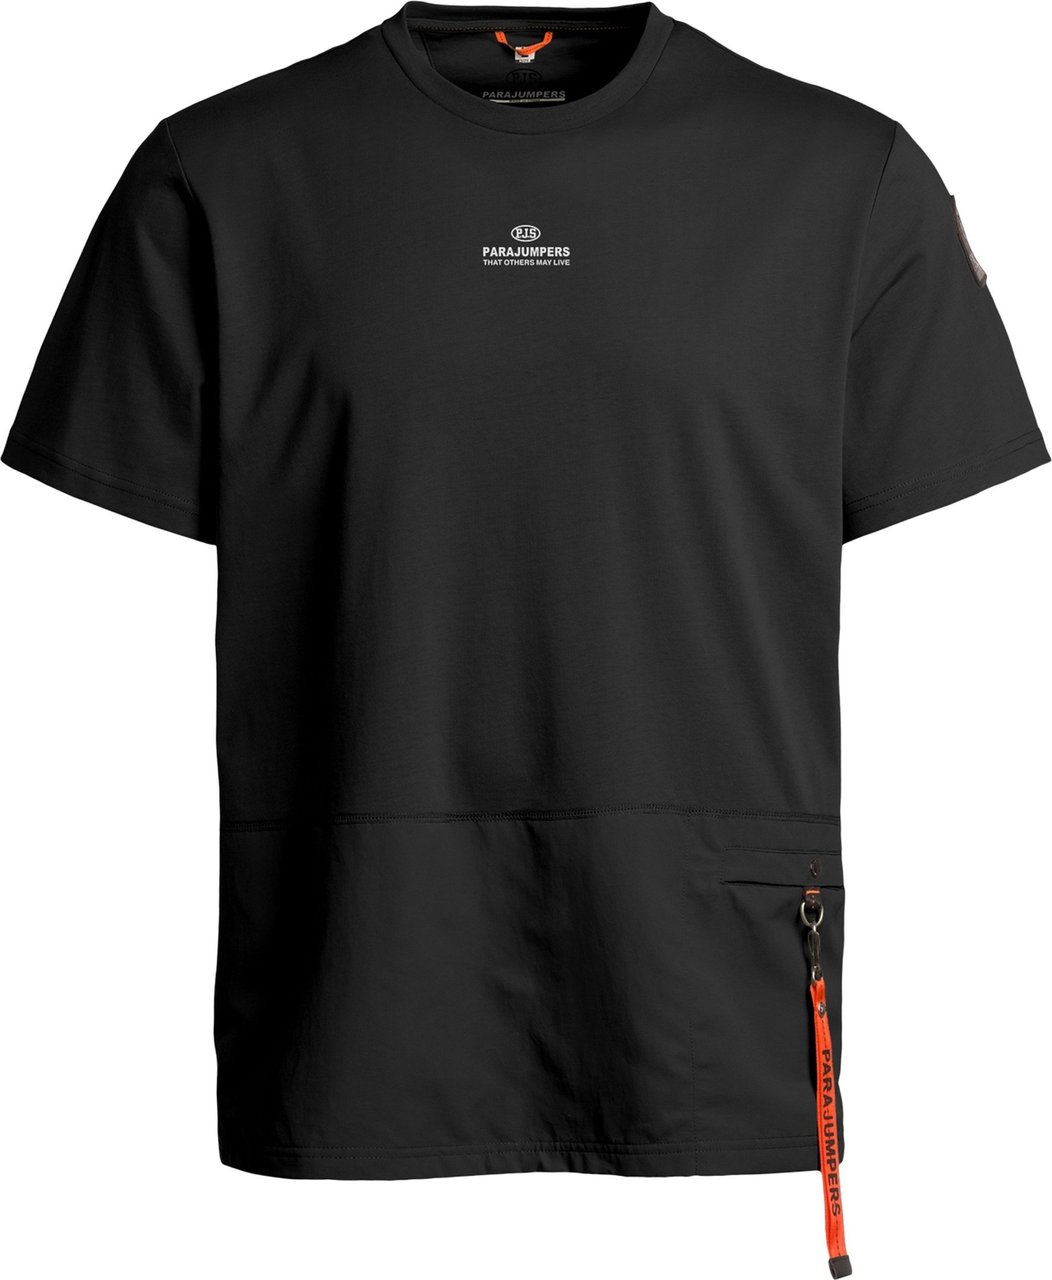 Parajumpers Clint T-Shirt Rescue Zwart